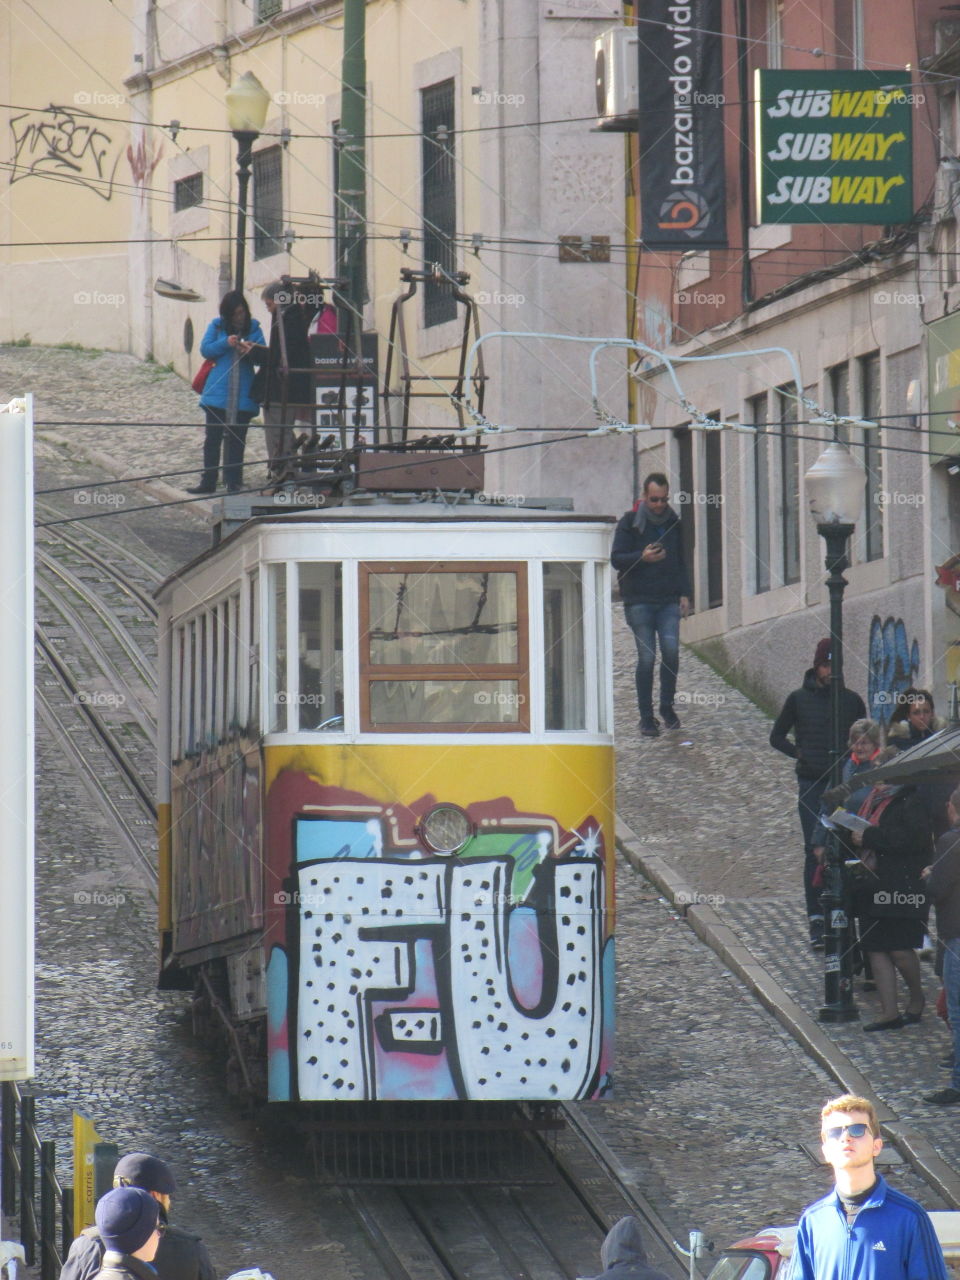 streetcar lisbon